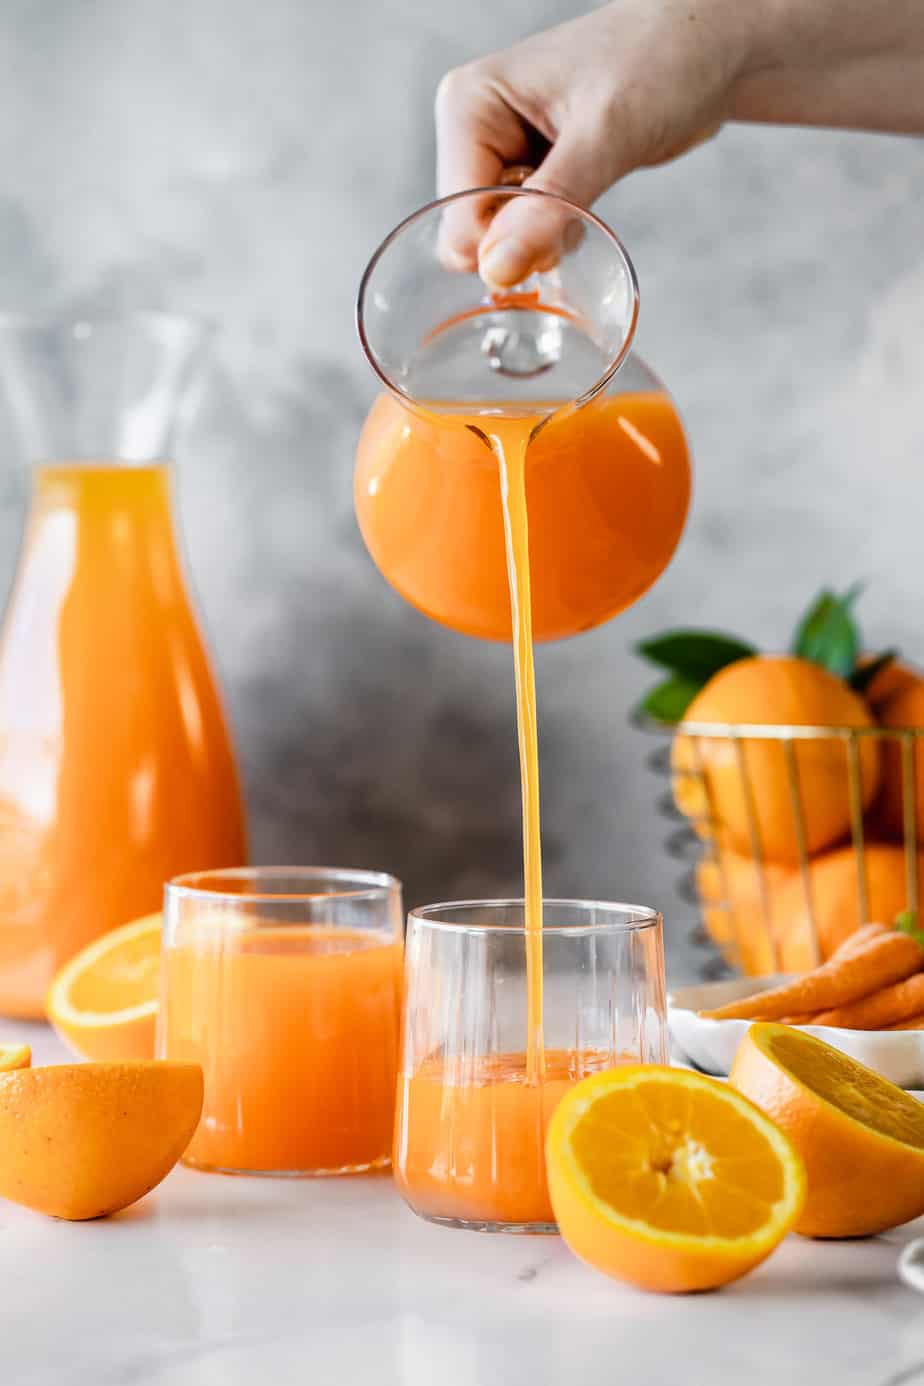 A jug pouring orange breakfast juice into serving glasses.